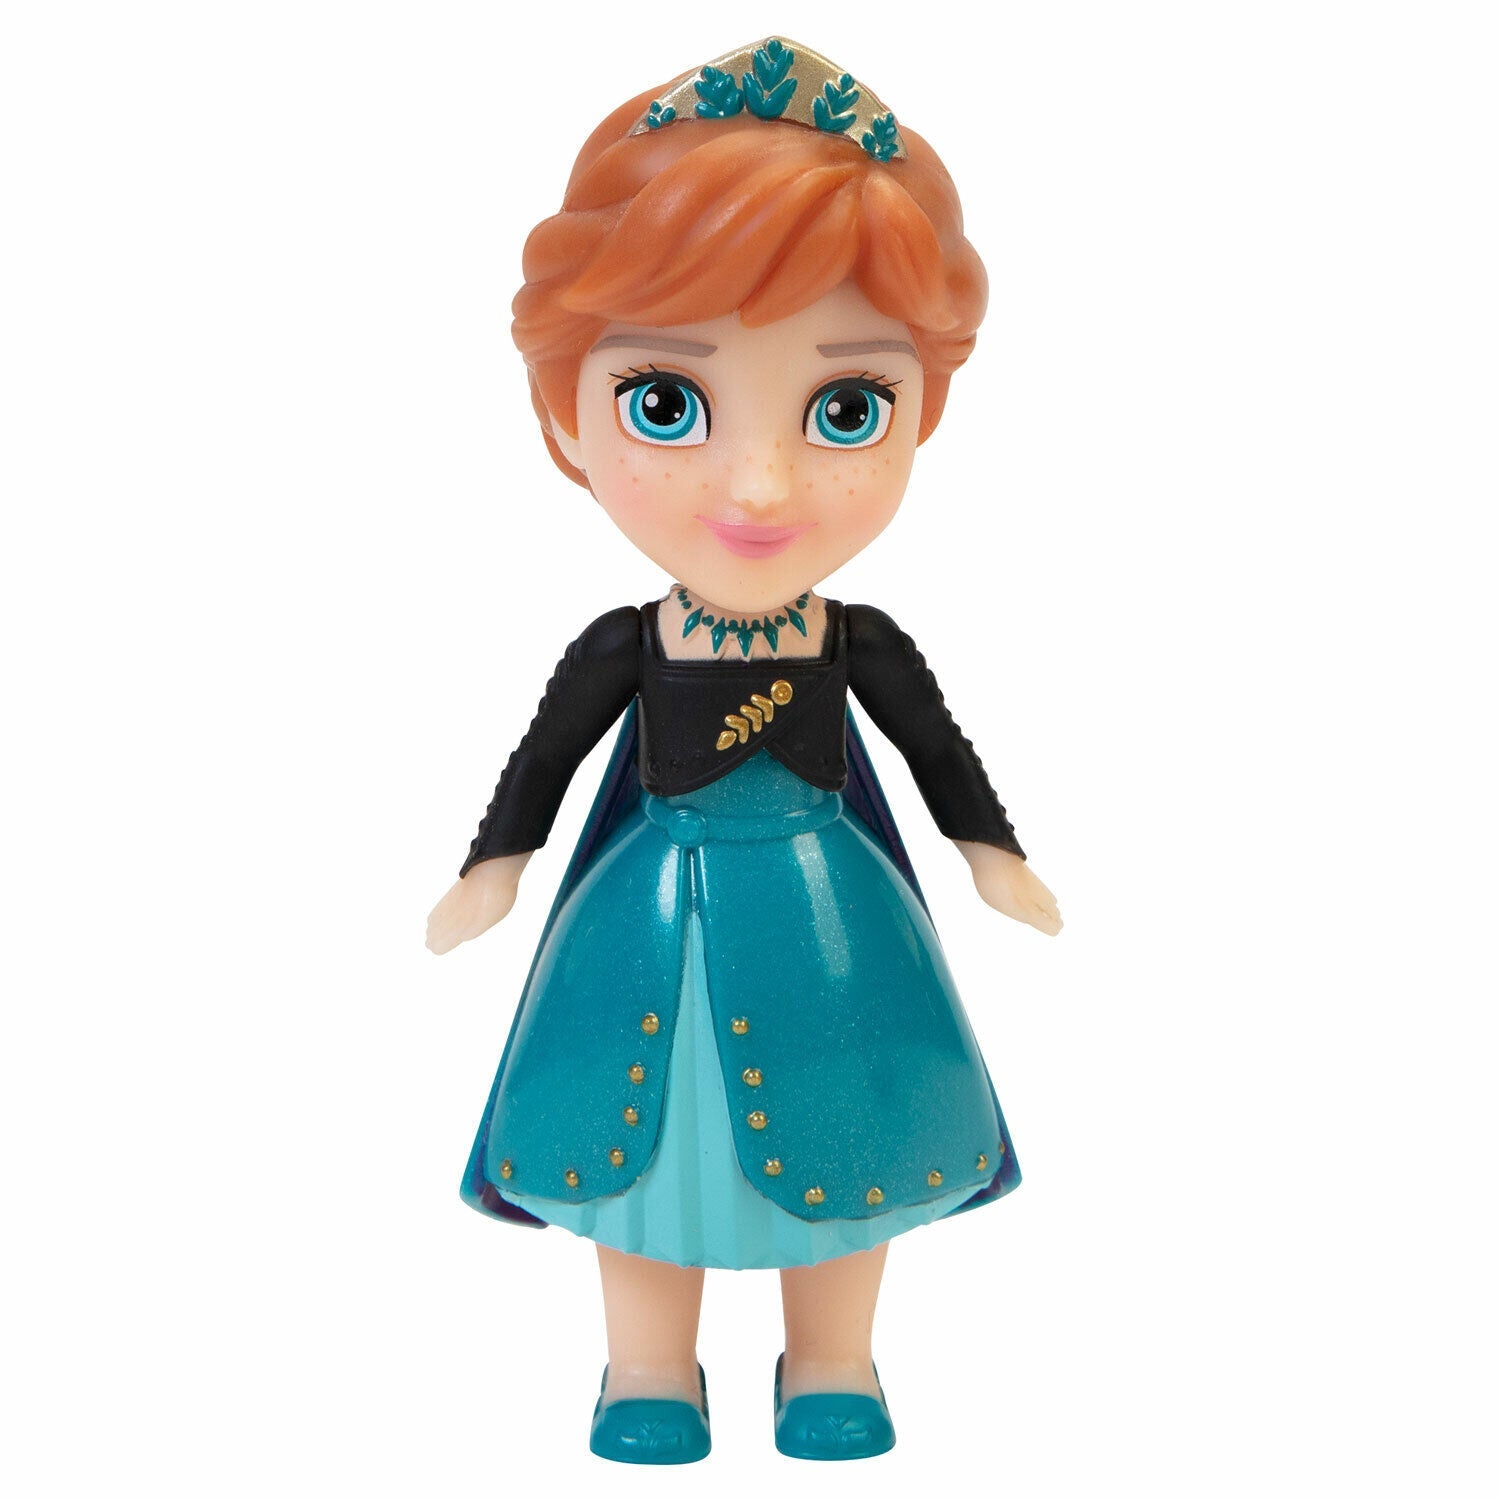 Disney Mini 3-Inch Toddler Dolls - Pick Your Favorite! - Queen Anna (Frozen 2)